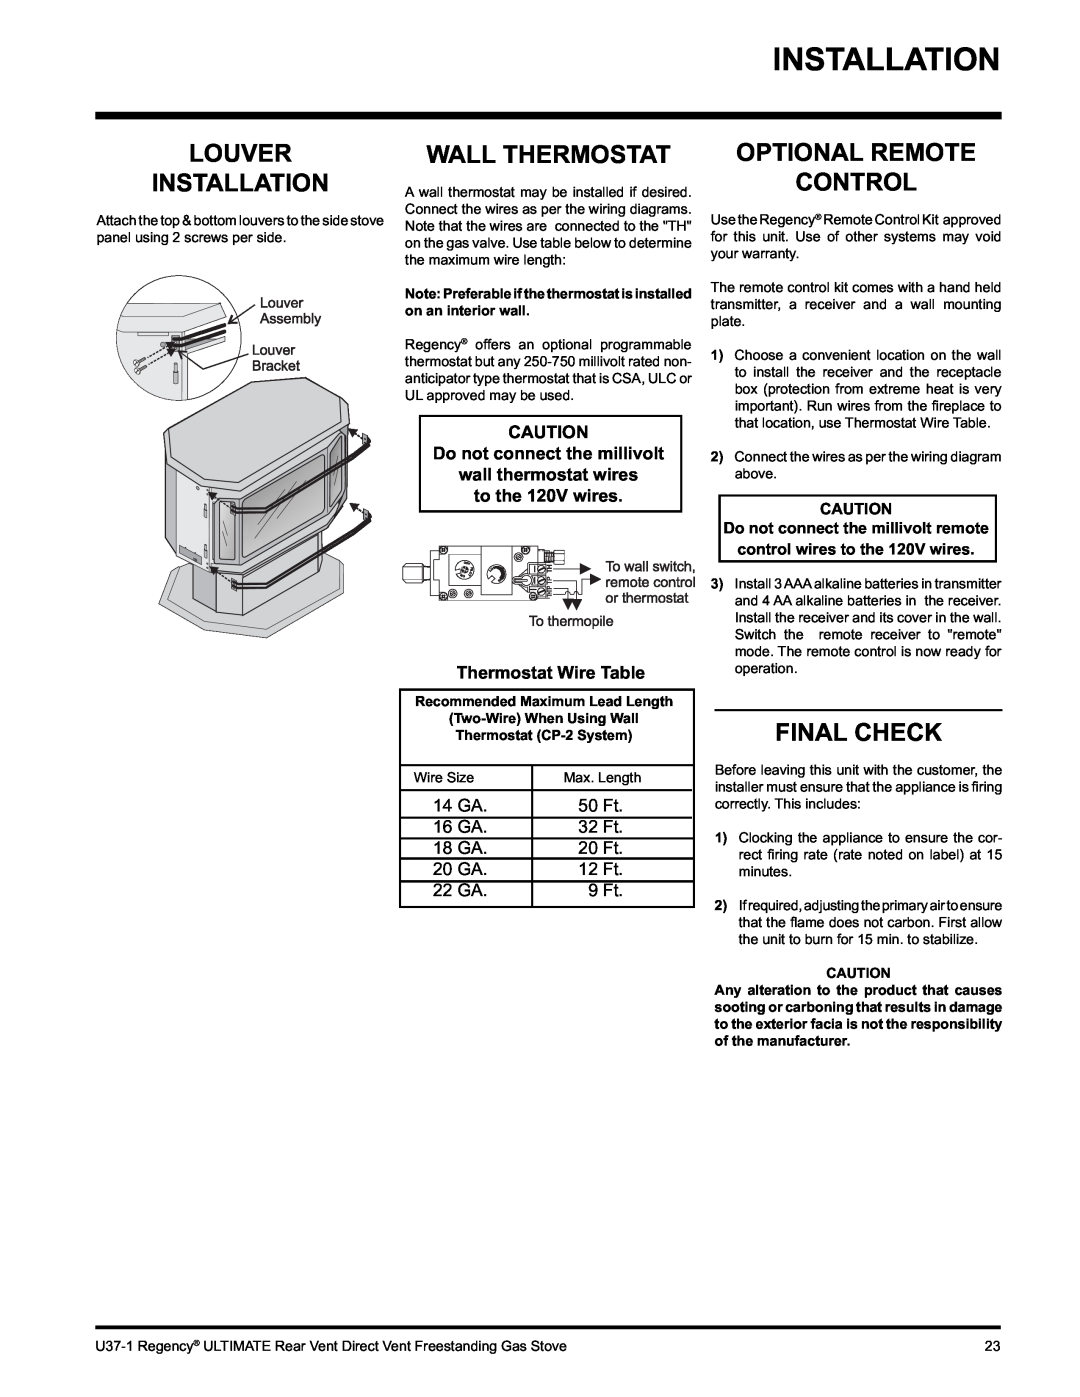 Regency U37-NG1, U37-LP1 installation manual Louver Installation, Wall Thermostat, Optional Remote Control, Final Check 